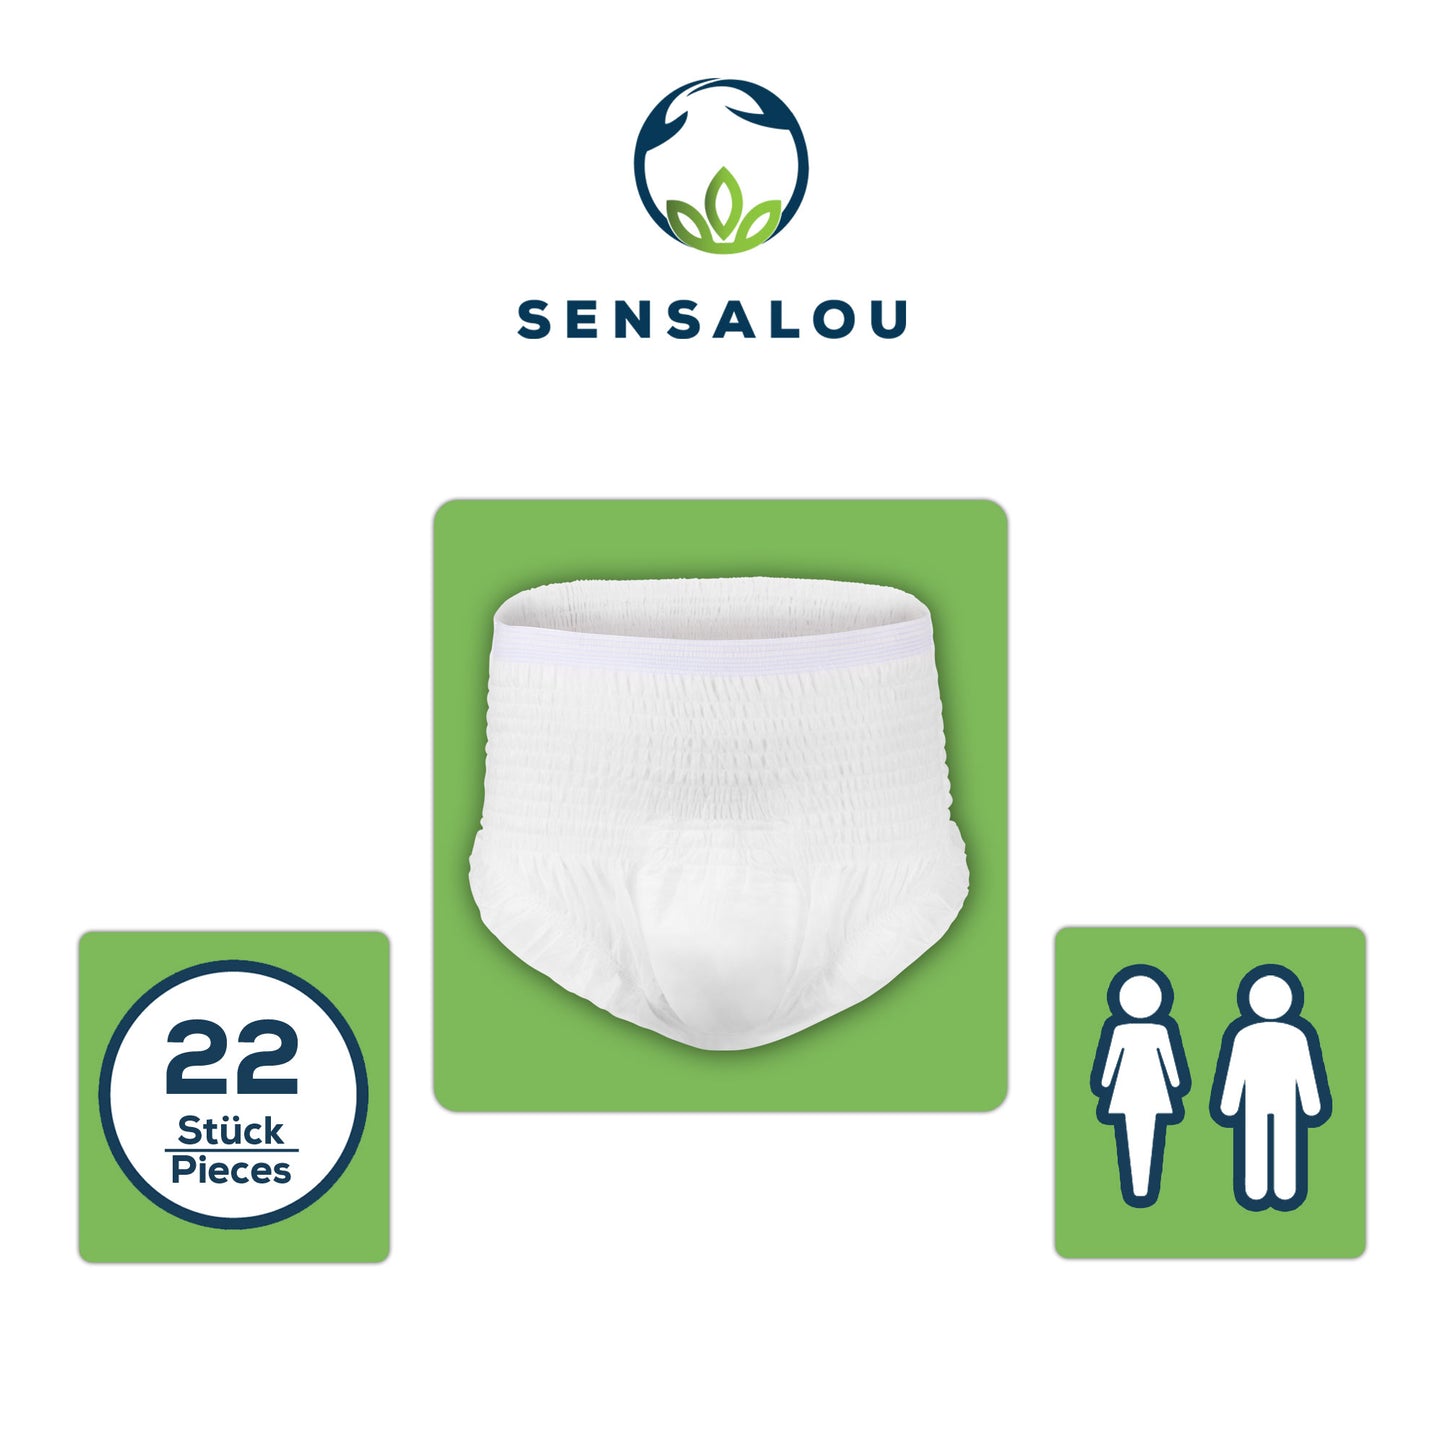 Sensalou Pants Maxi - Size L